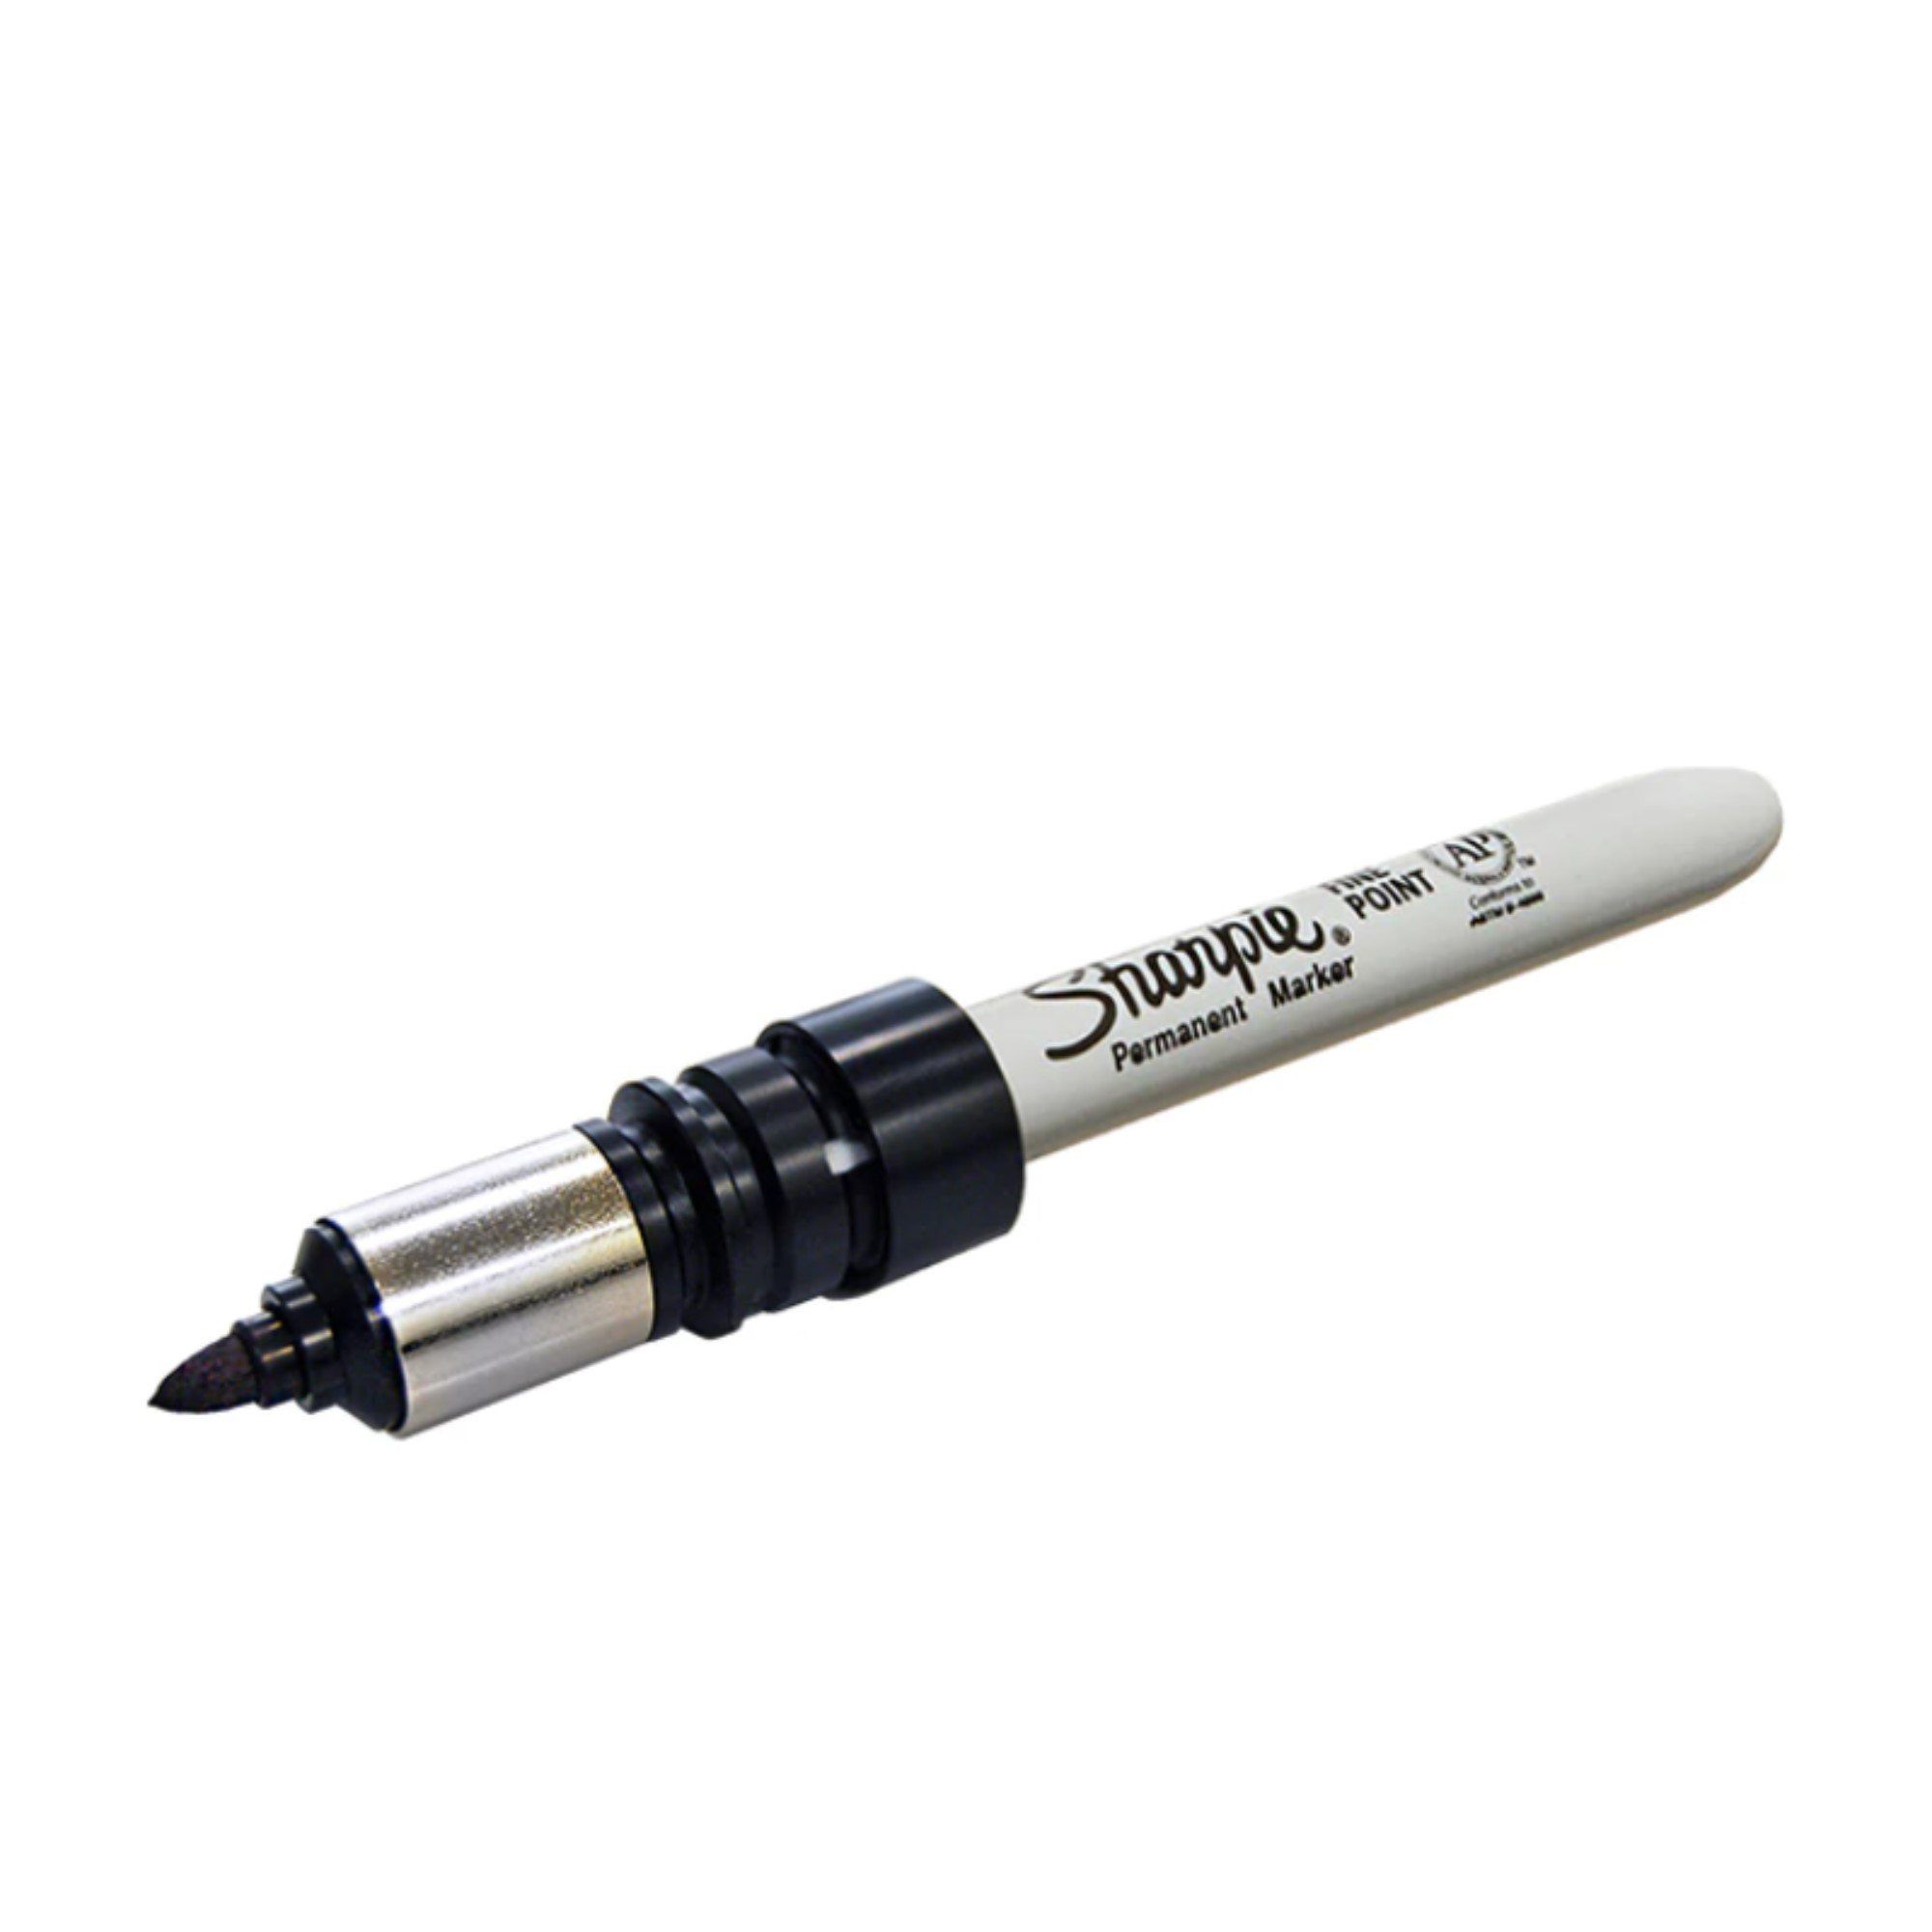 Best Graphtec Sharpie Pen Holder at Low Price